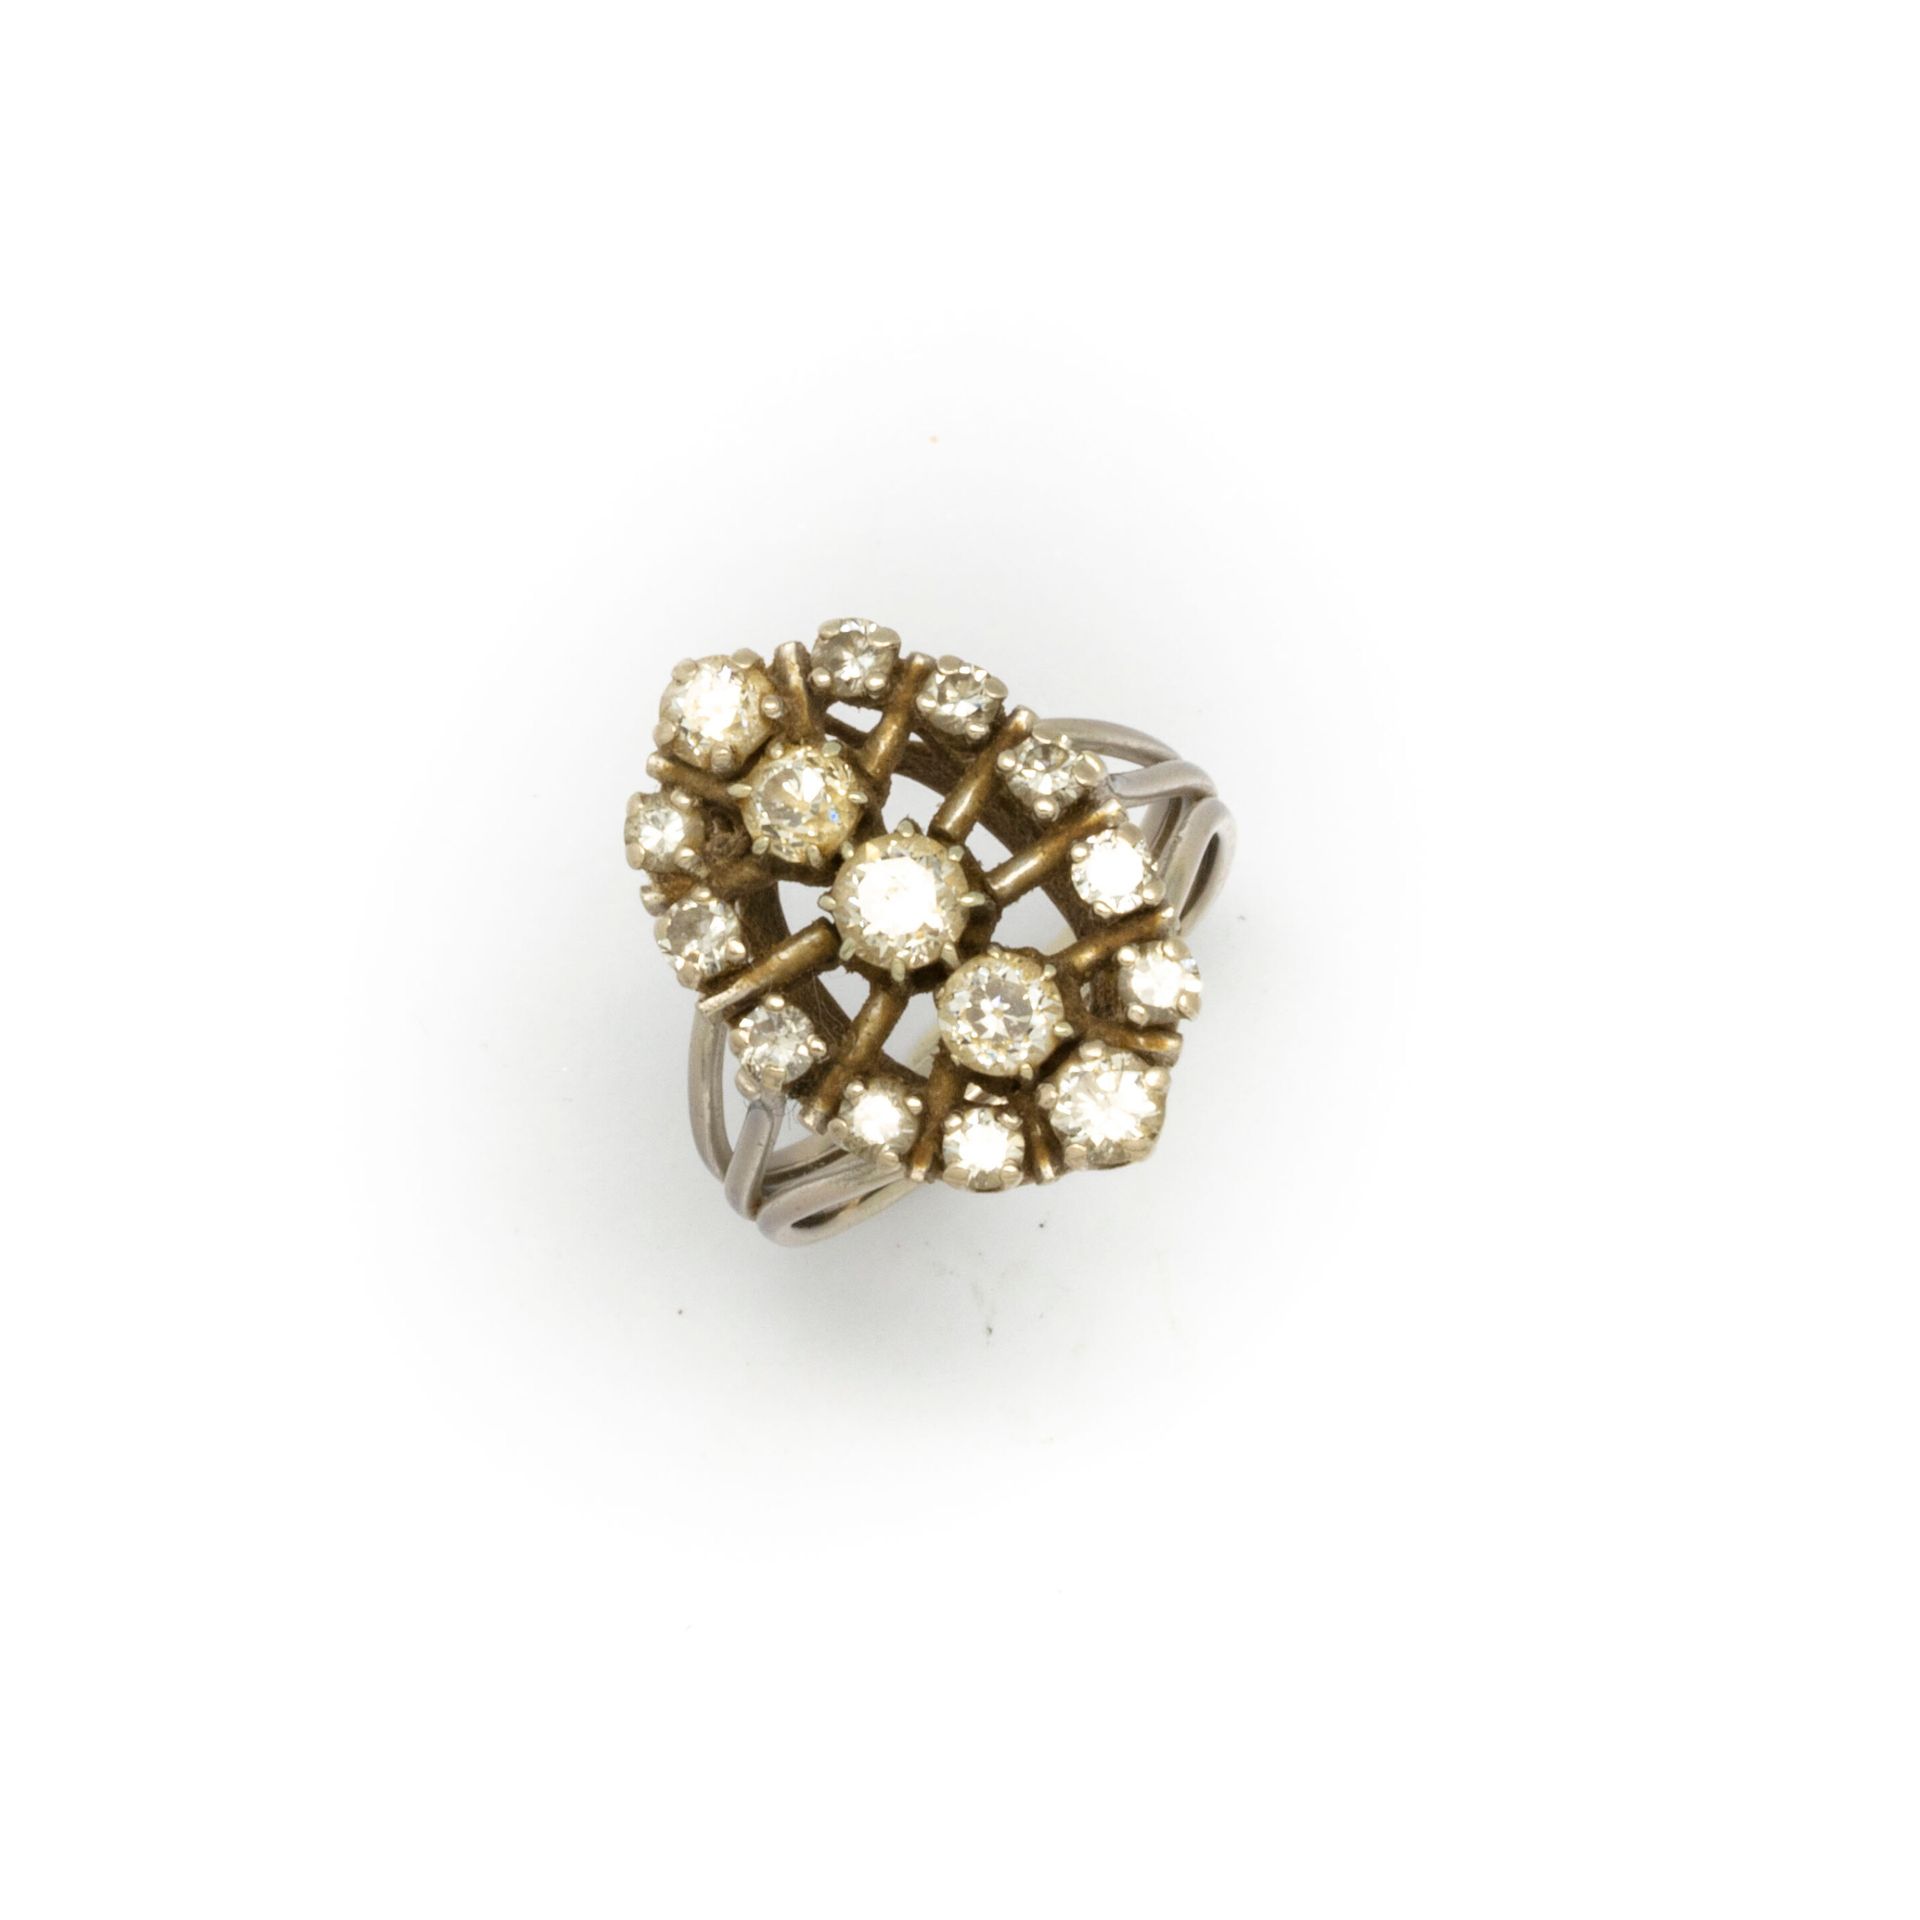 Null Anillo navette de oro blanco, pavimentado con pequeños diamantes

TDD : 52
&hellip;